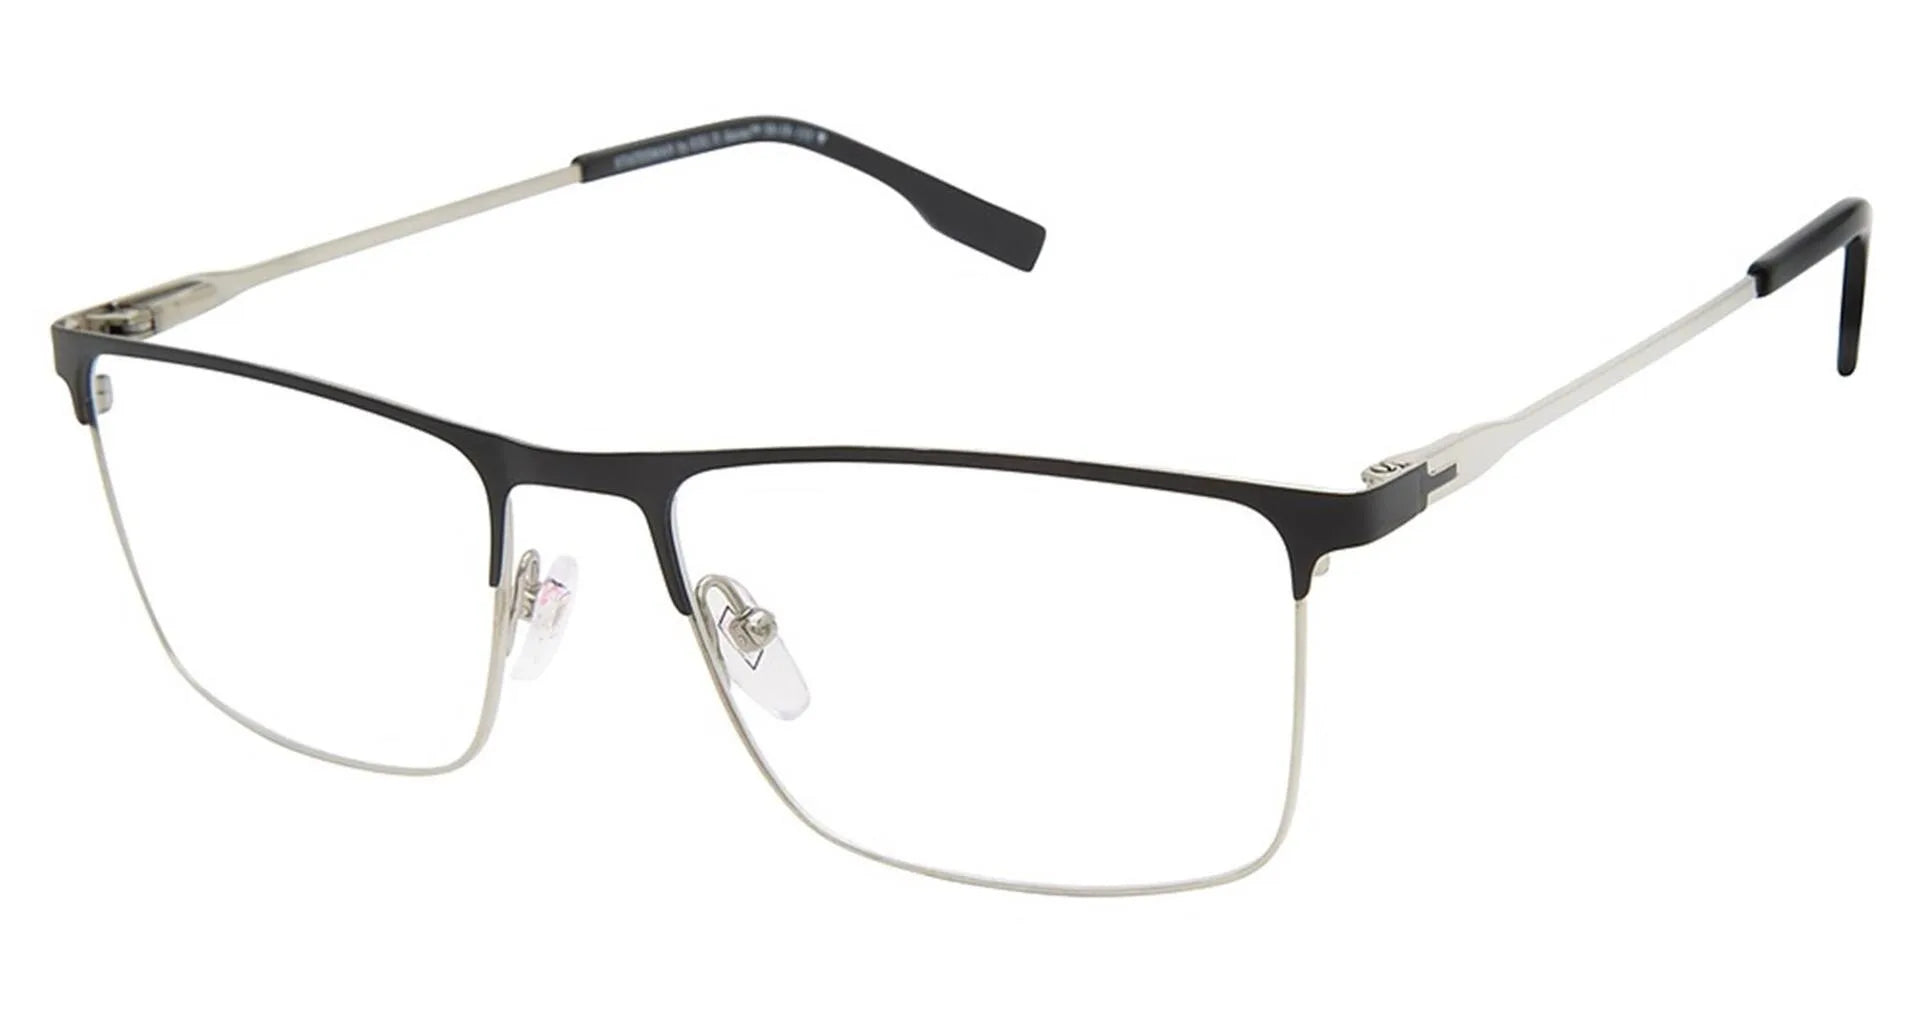 XXL Eyewear Statesman Eyeglasses Black